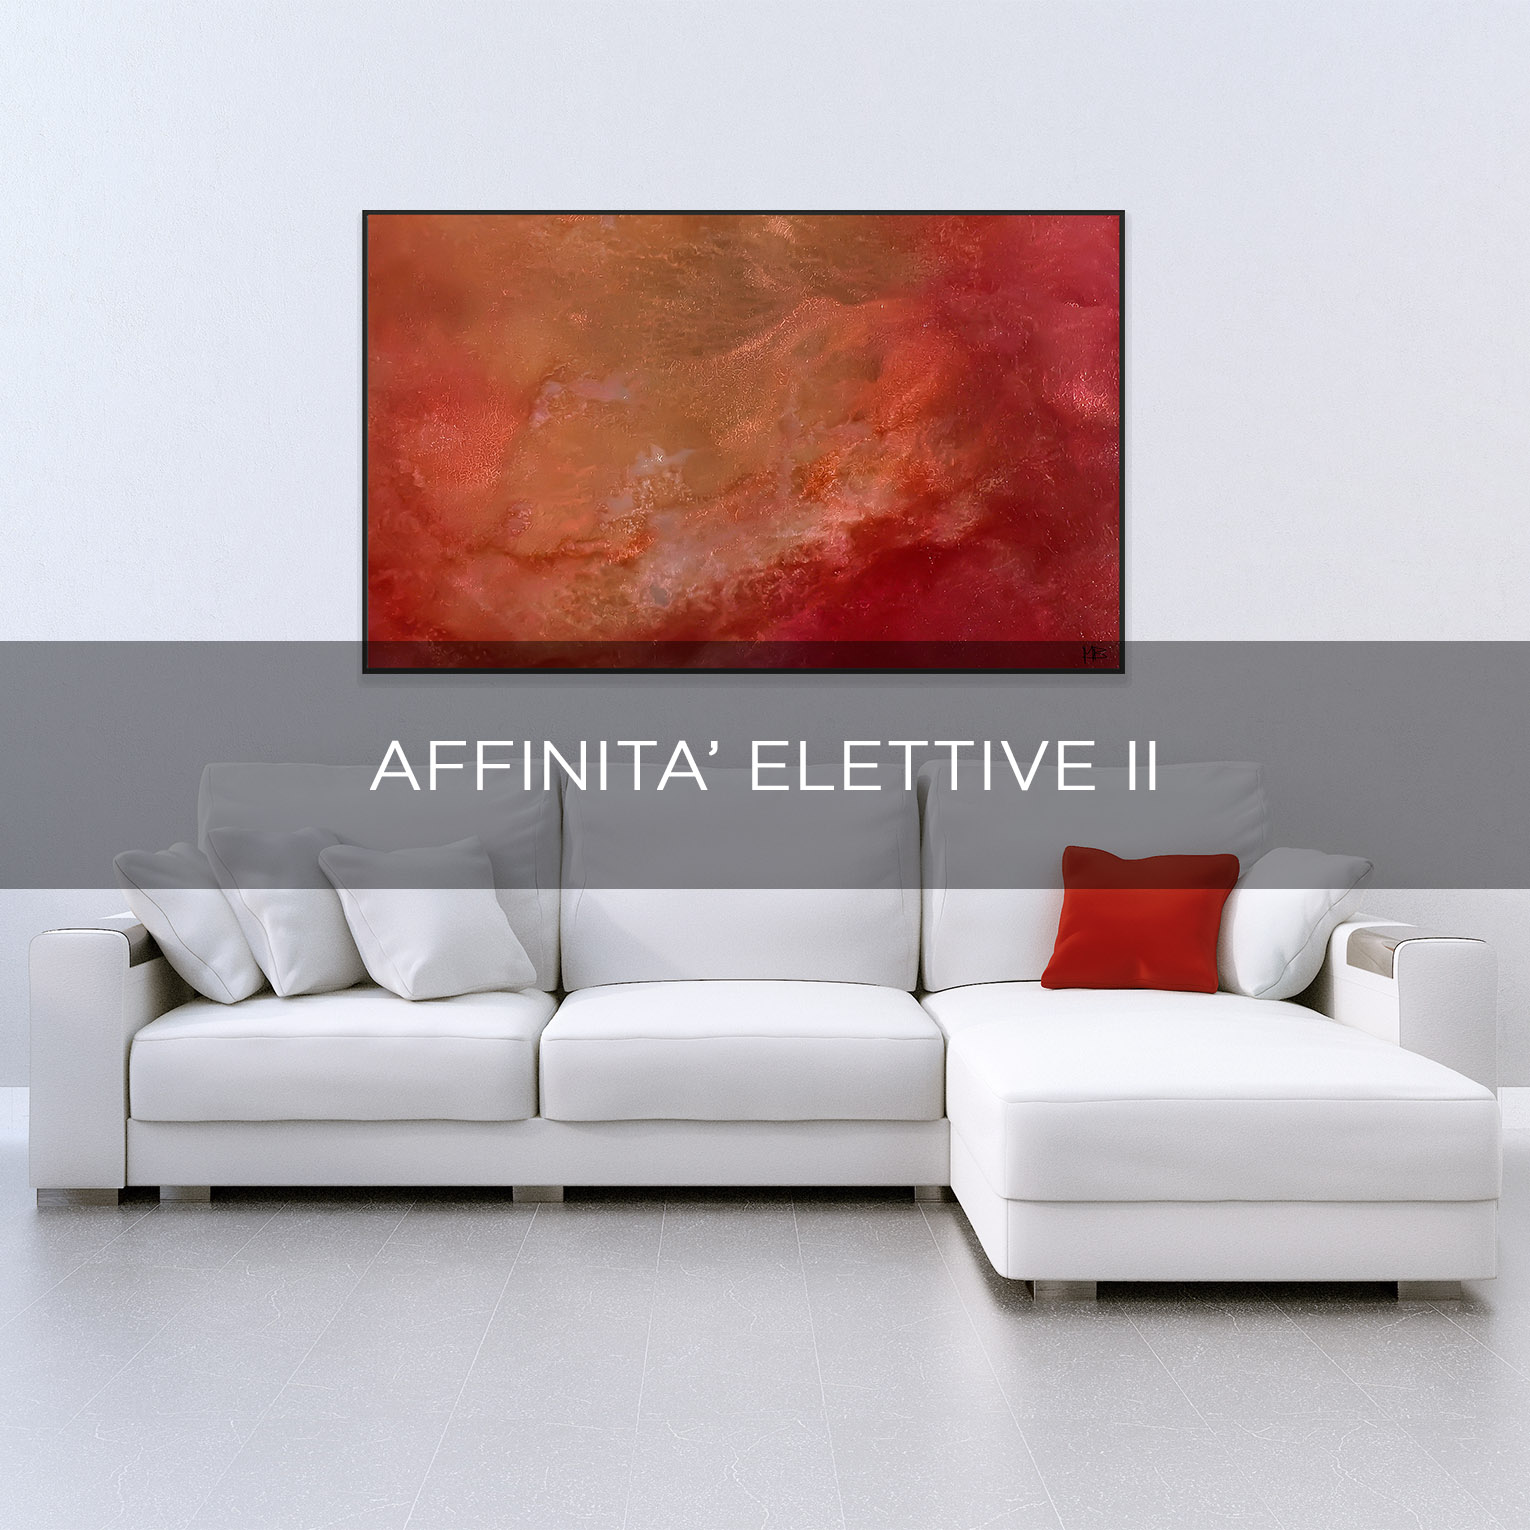 AFFINITA' ELETTIVE II